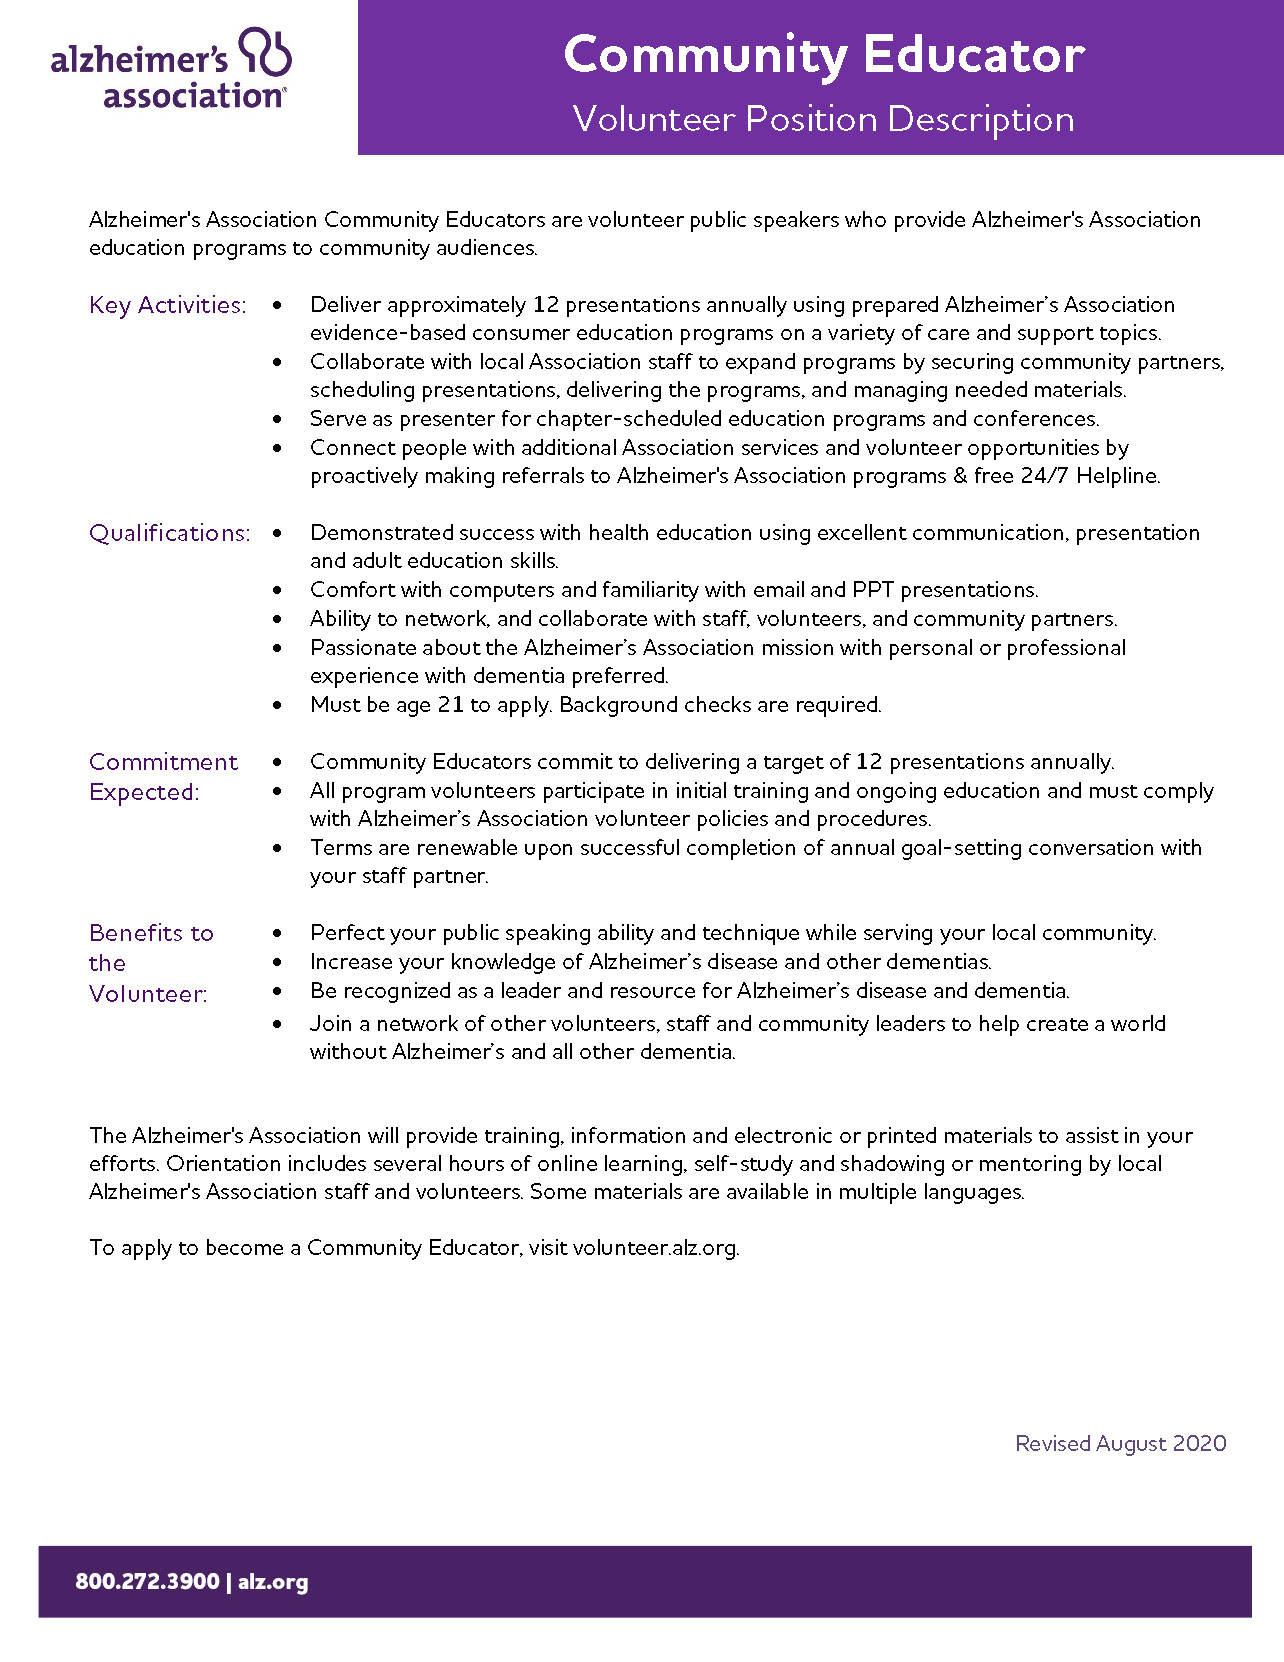 Community-Educator-position-description_August-2020-(1).jpg